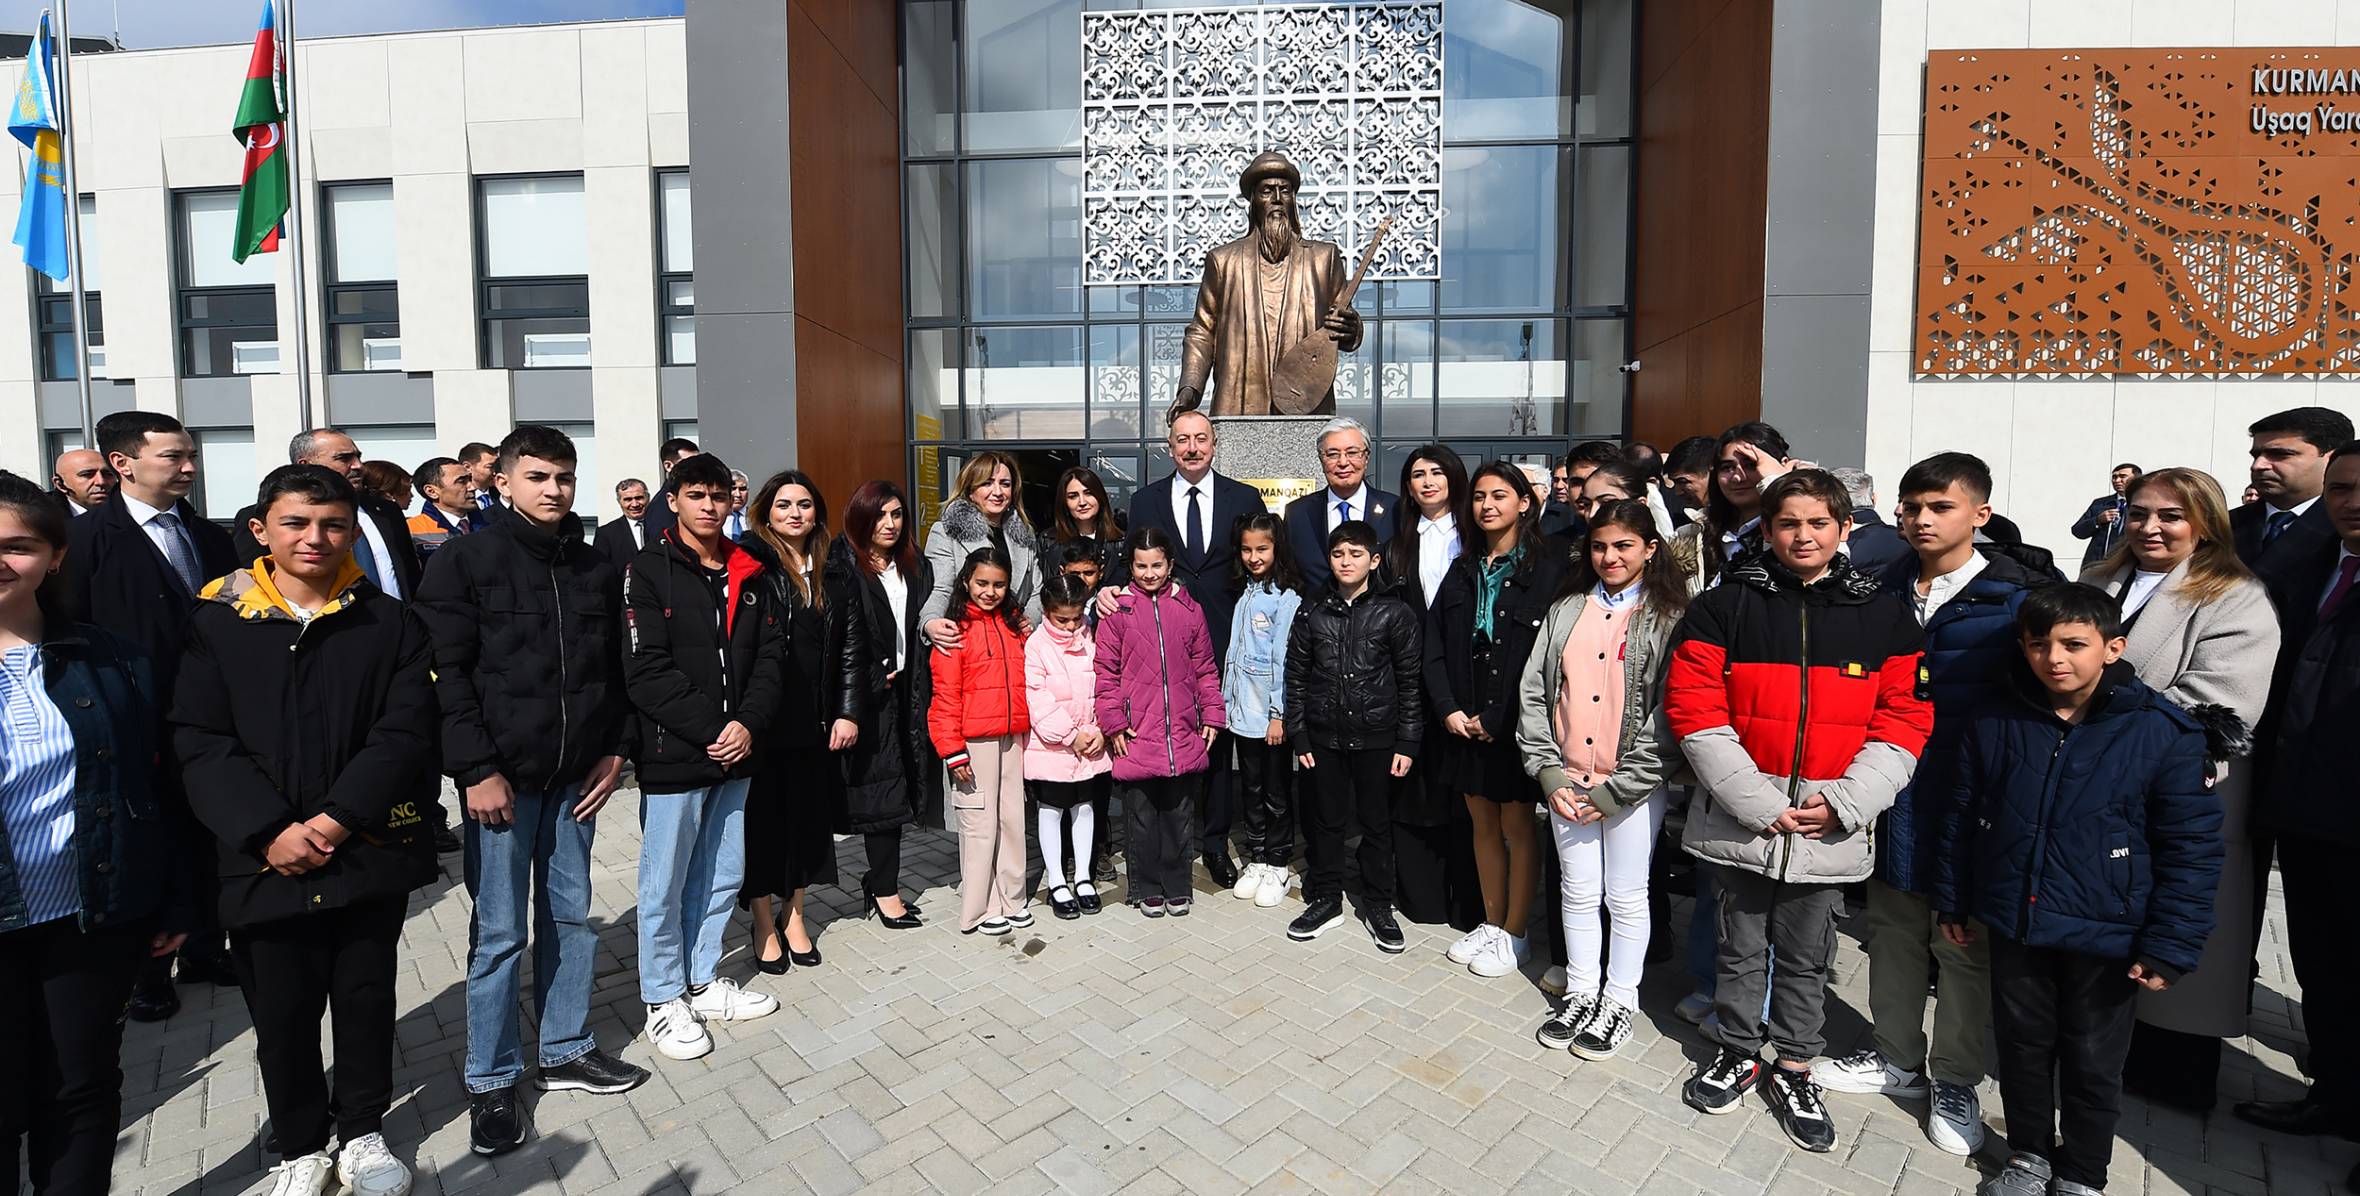 Azerbaijani and Kazakhstani presidents attended opening ceremony of Kurmangazy Children's Creativity Center in Fuzuli